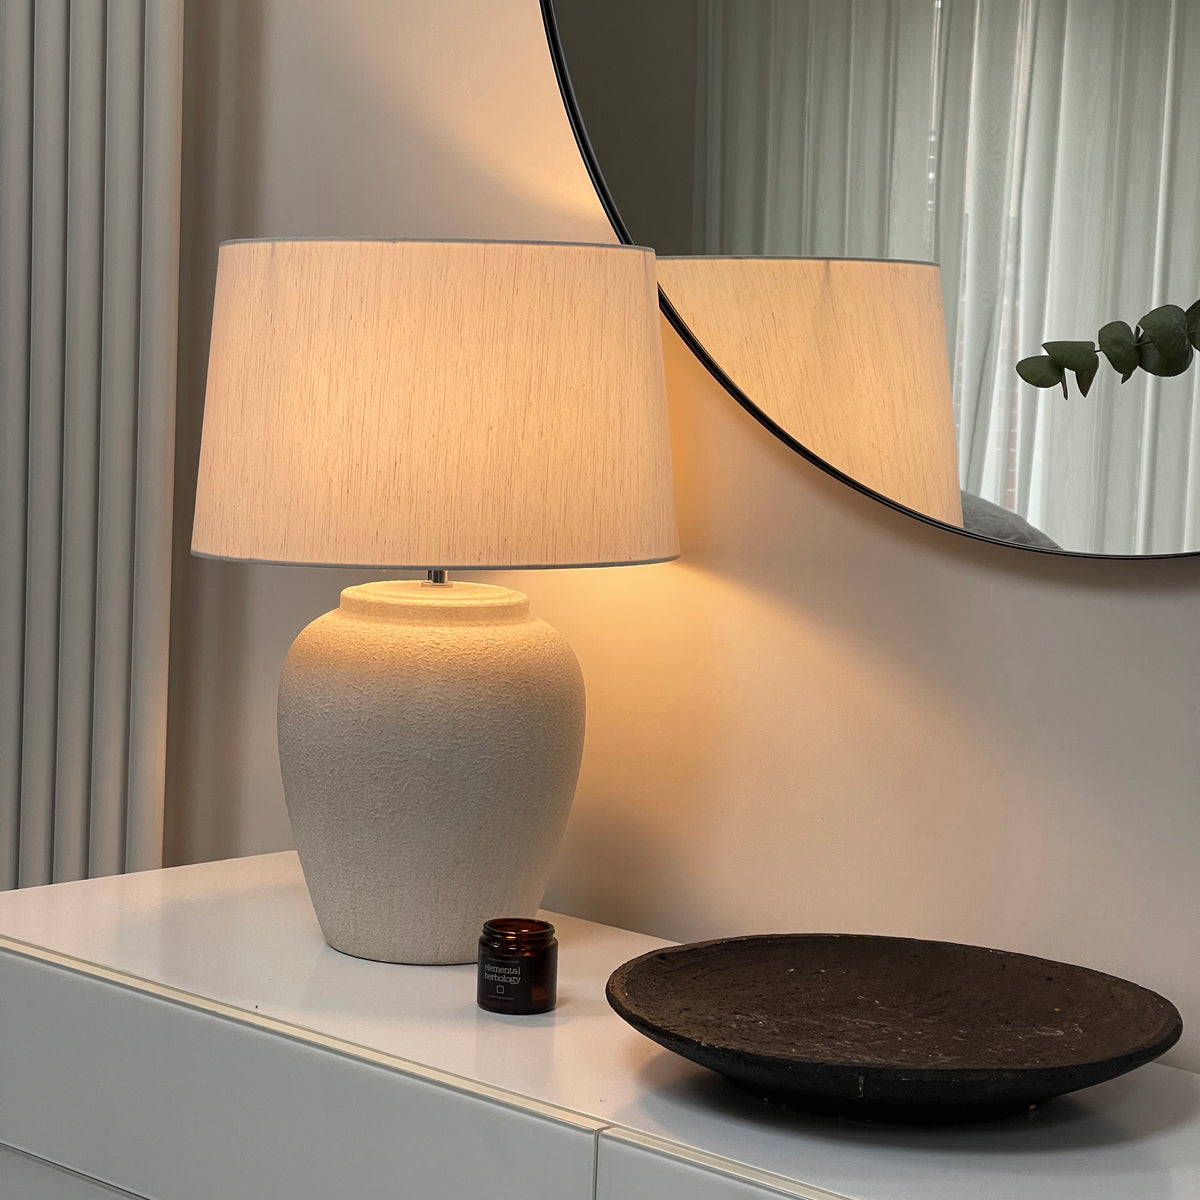 Stone Ceramic Drum Shade Table Lamp emitting warm lighting